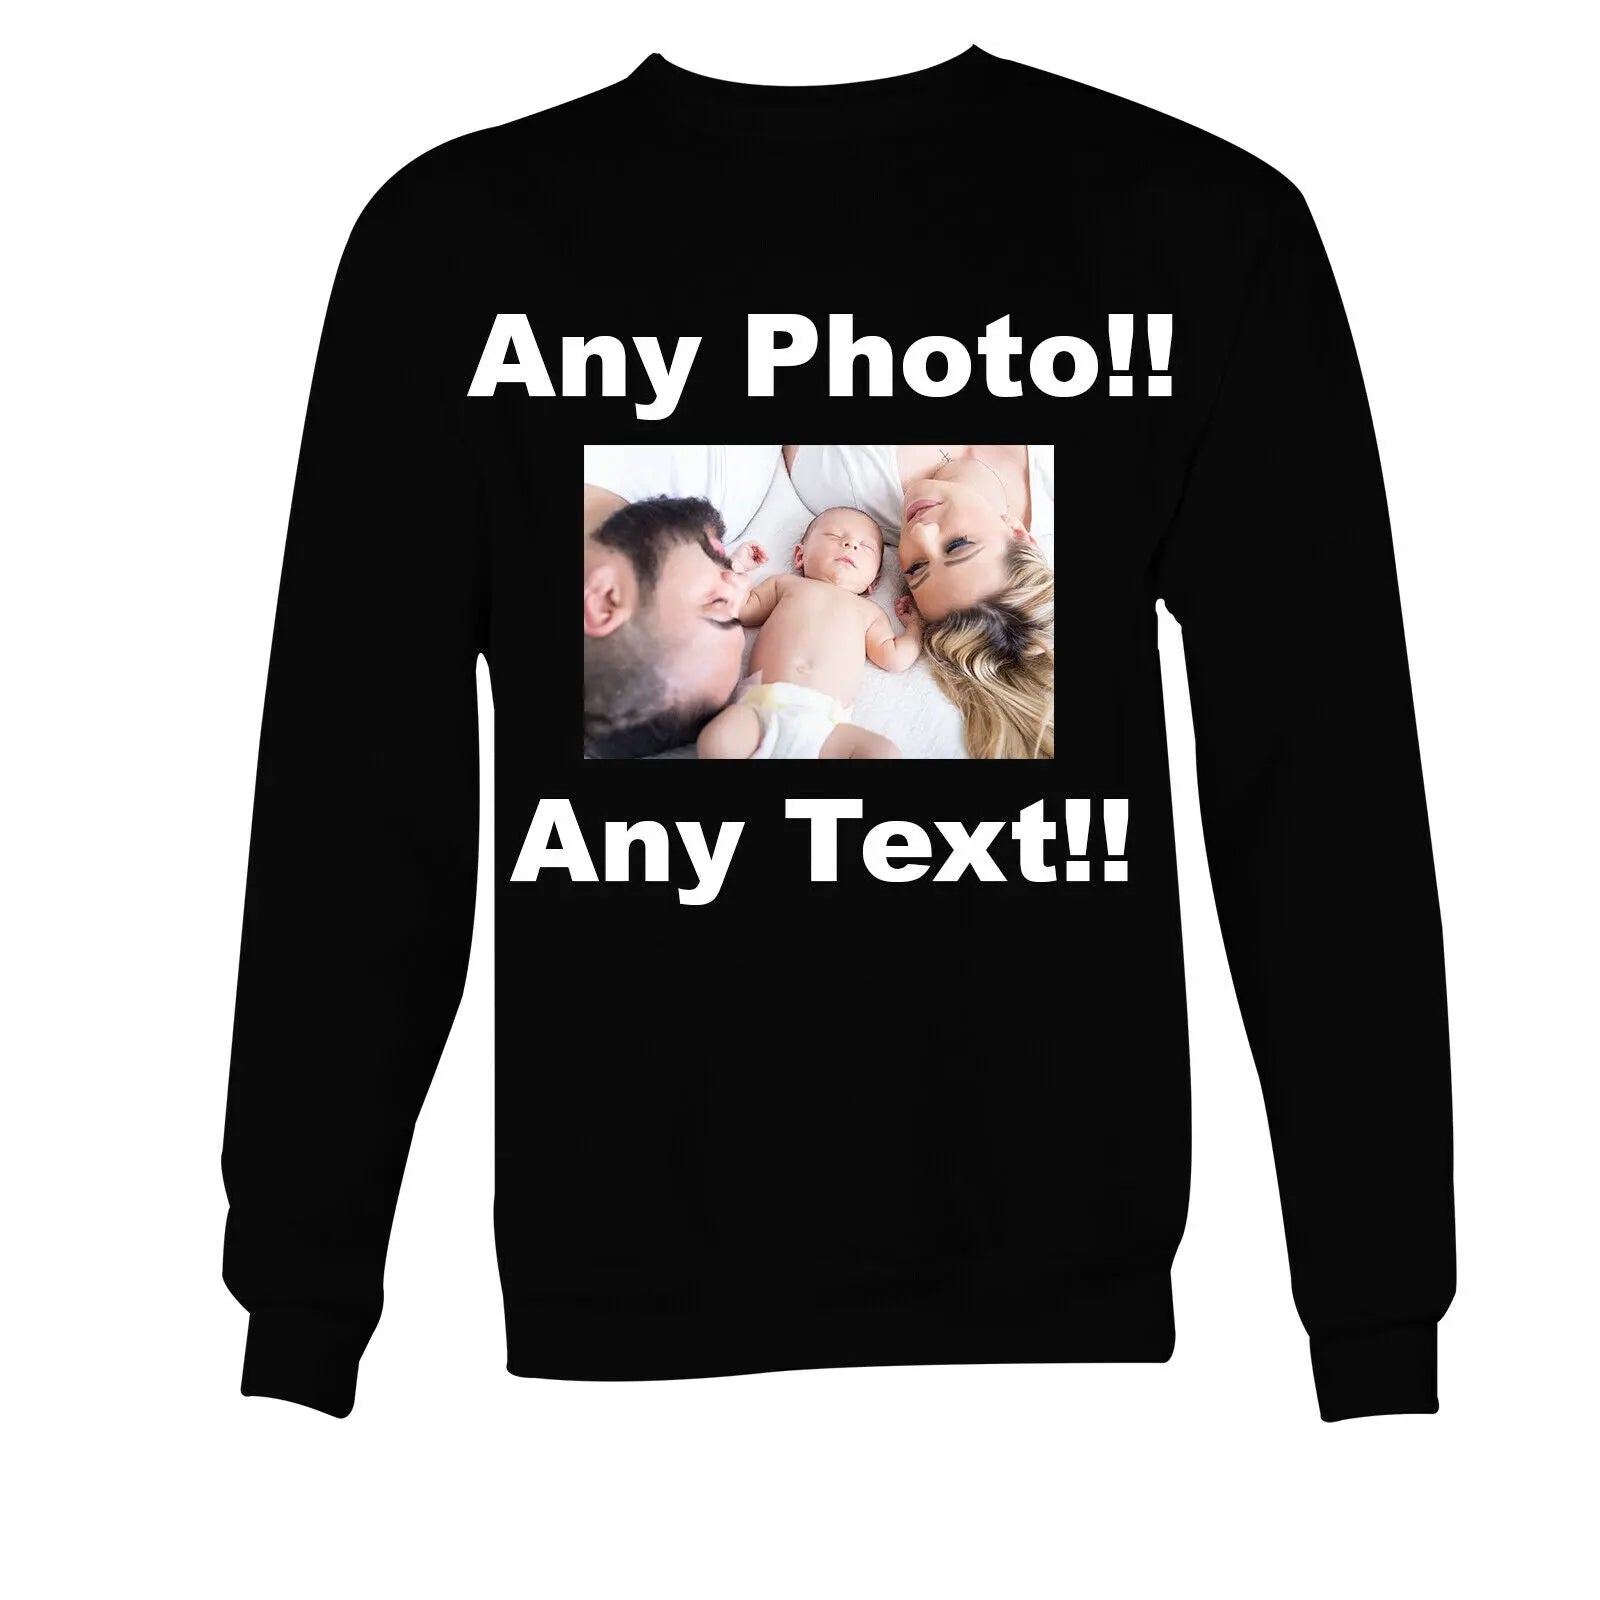 Personalised Photo Sweater Printed Custom Text Women Men Kids